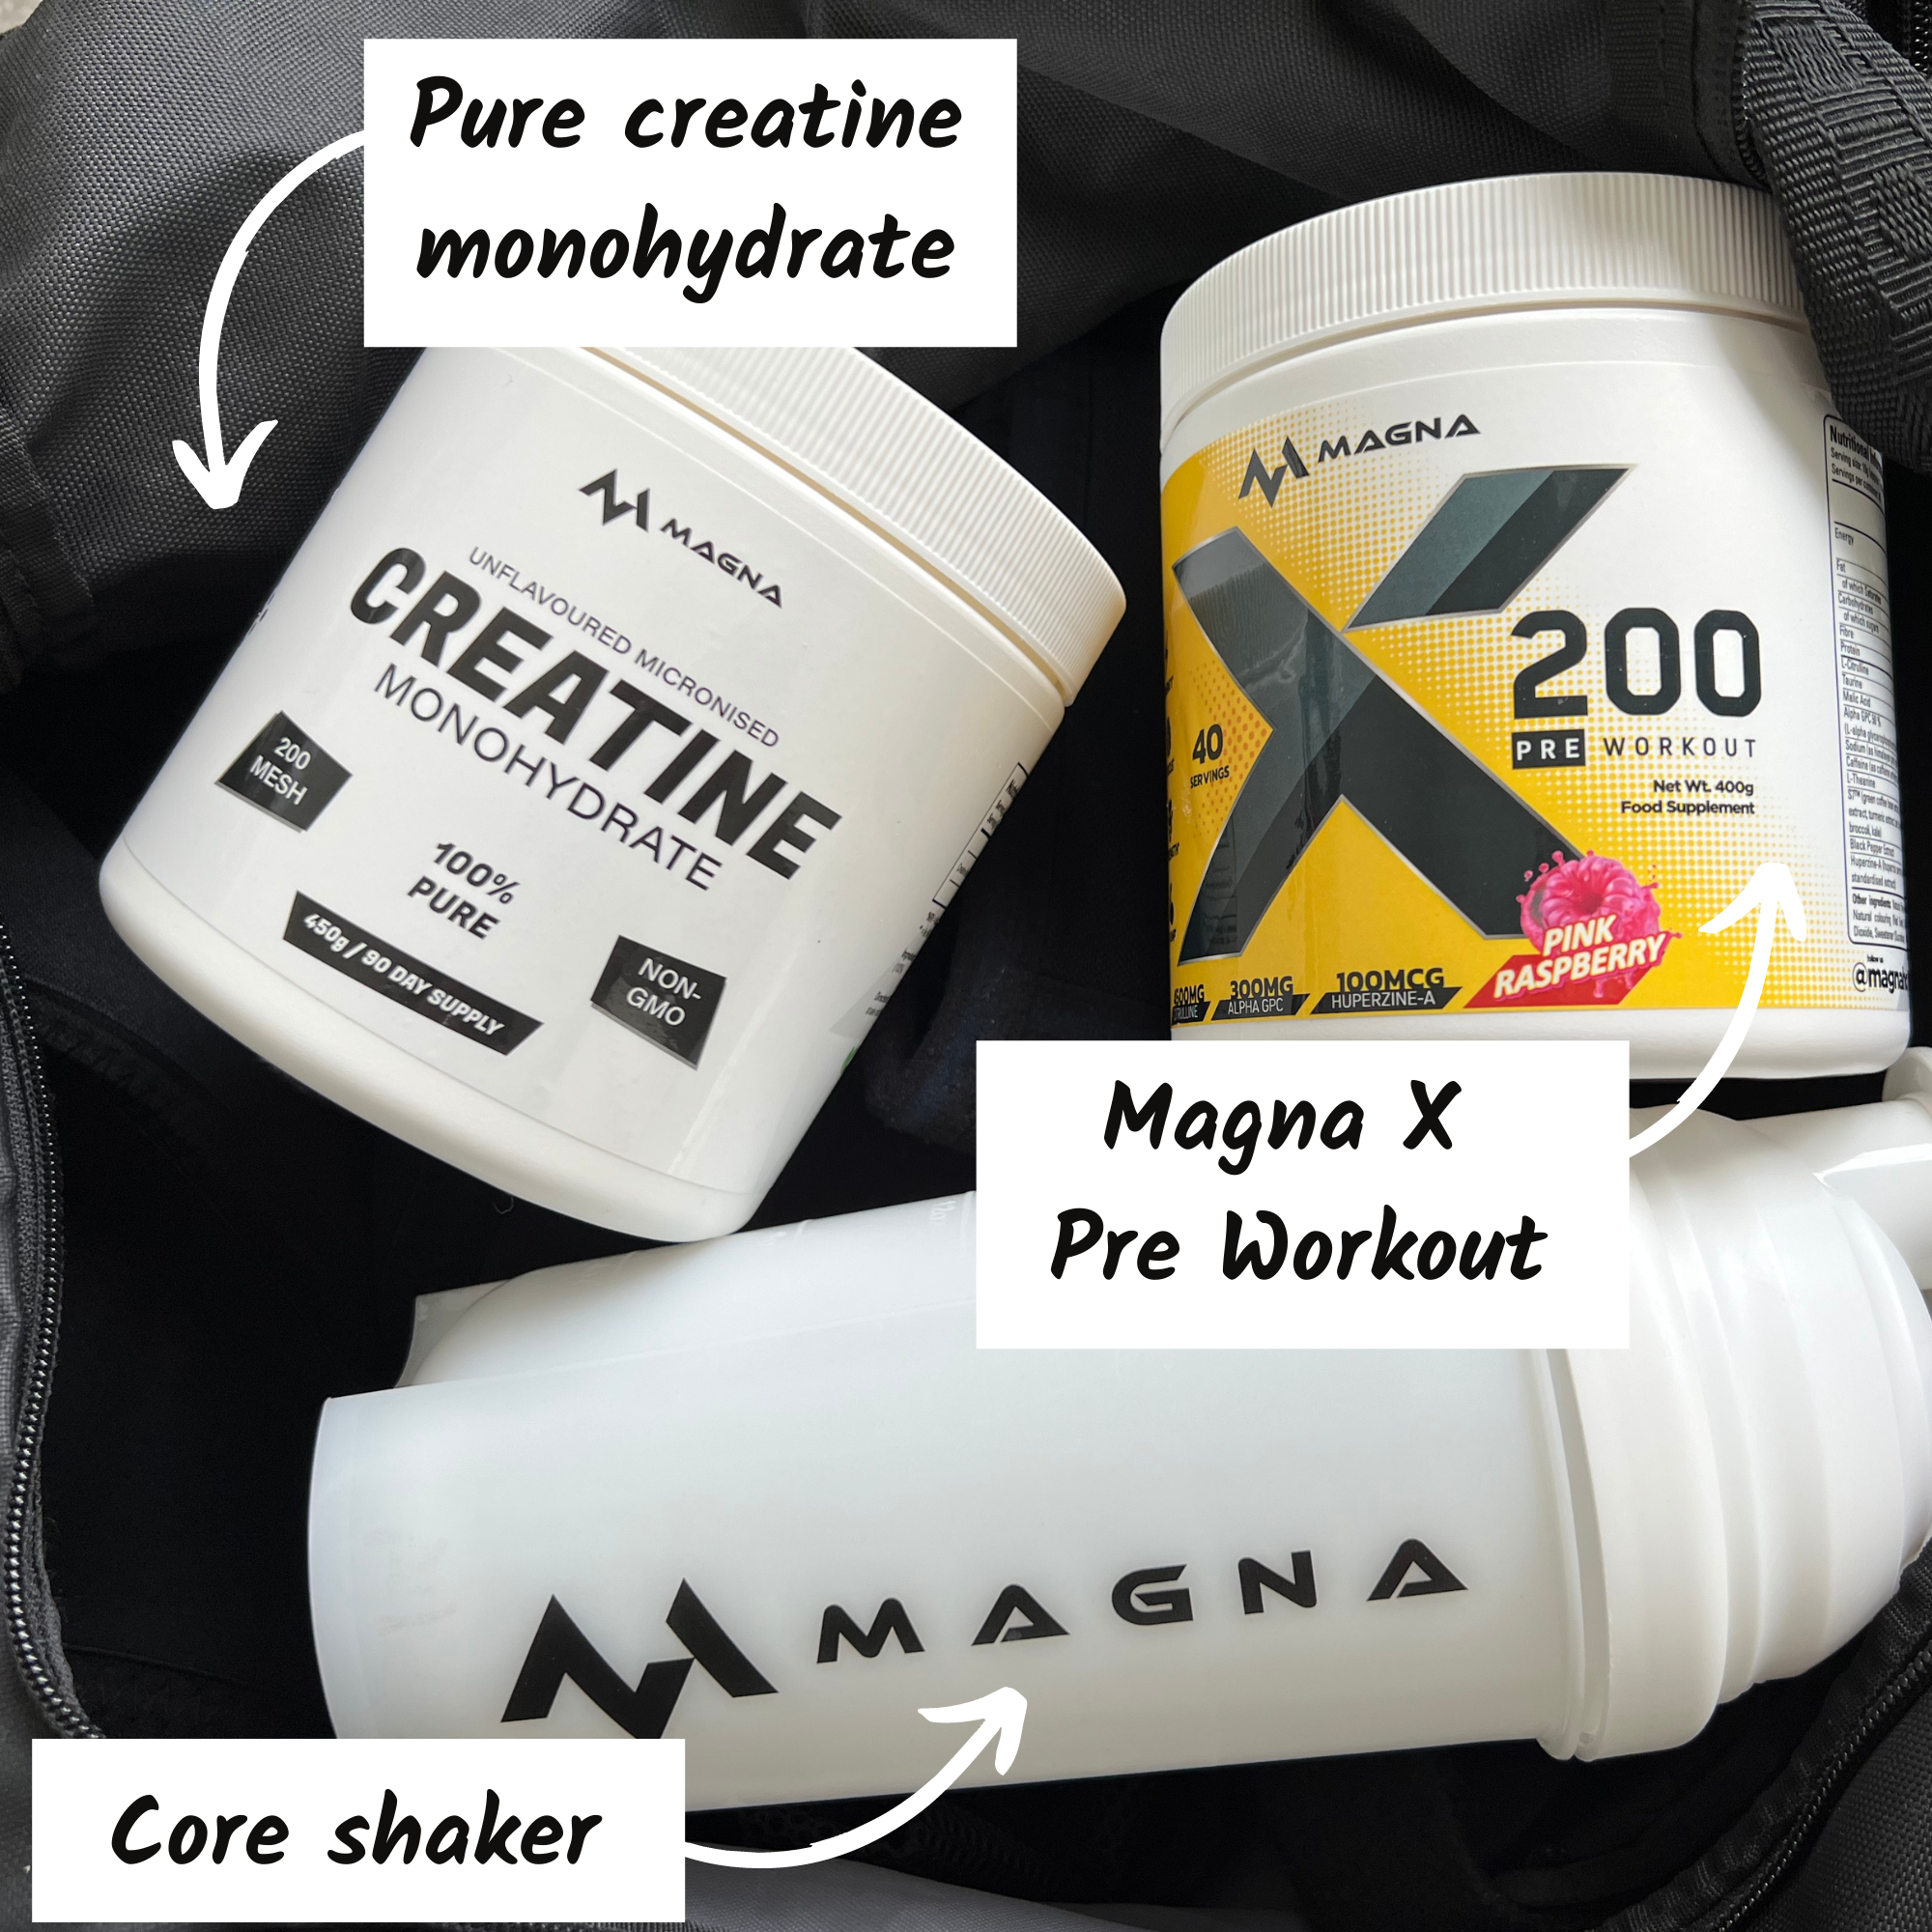 Magna X Pre Workout + Creatine Bundle - Save 15%